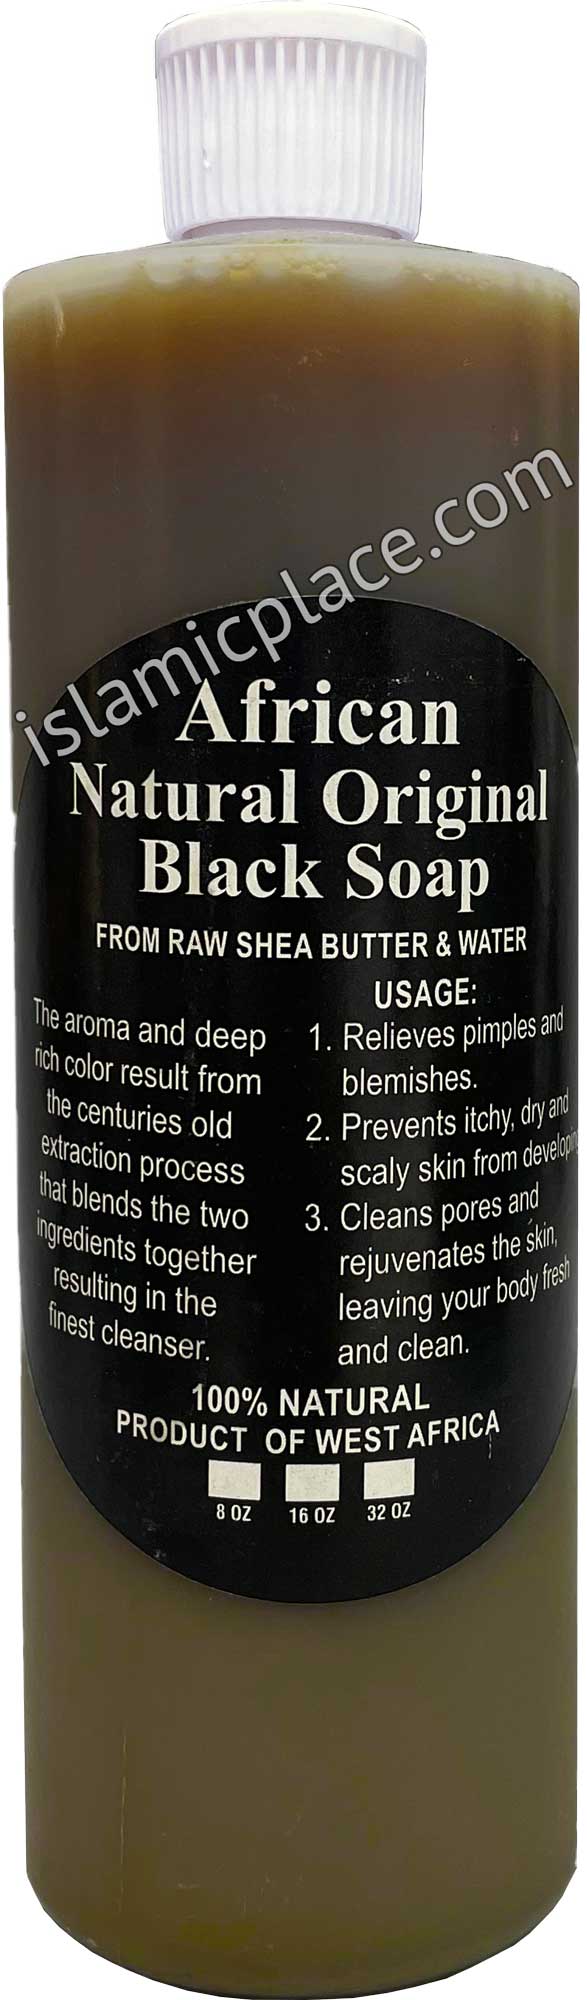 African Black Soap Liquid 16 oz Bottle